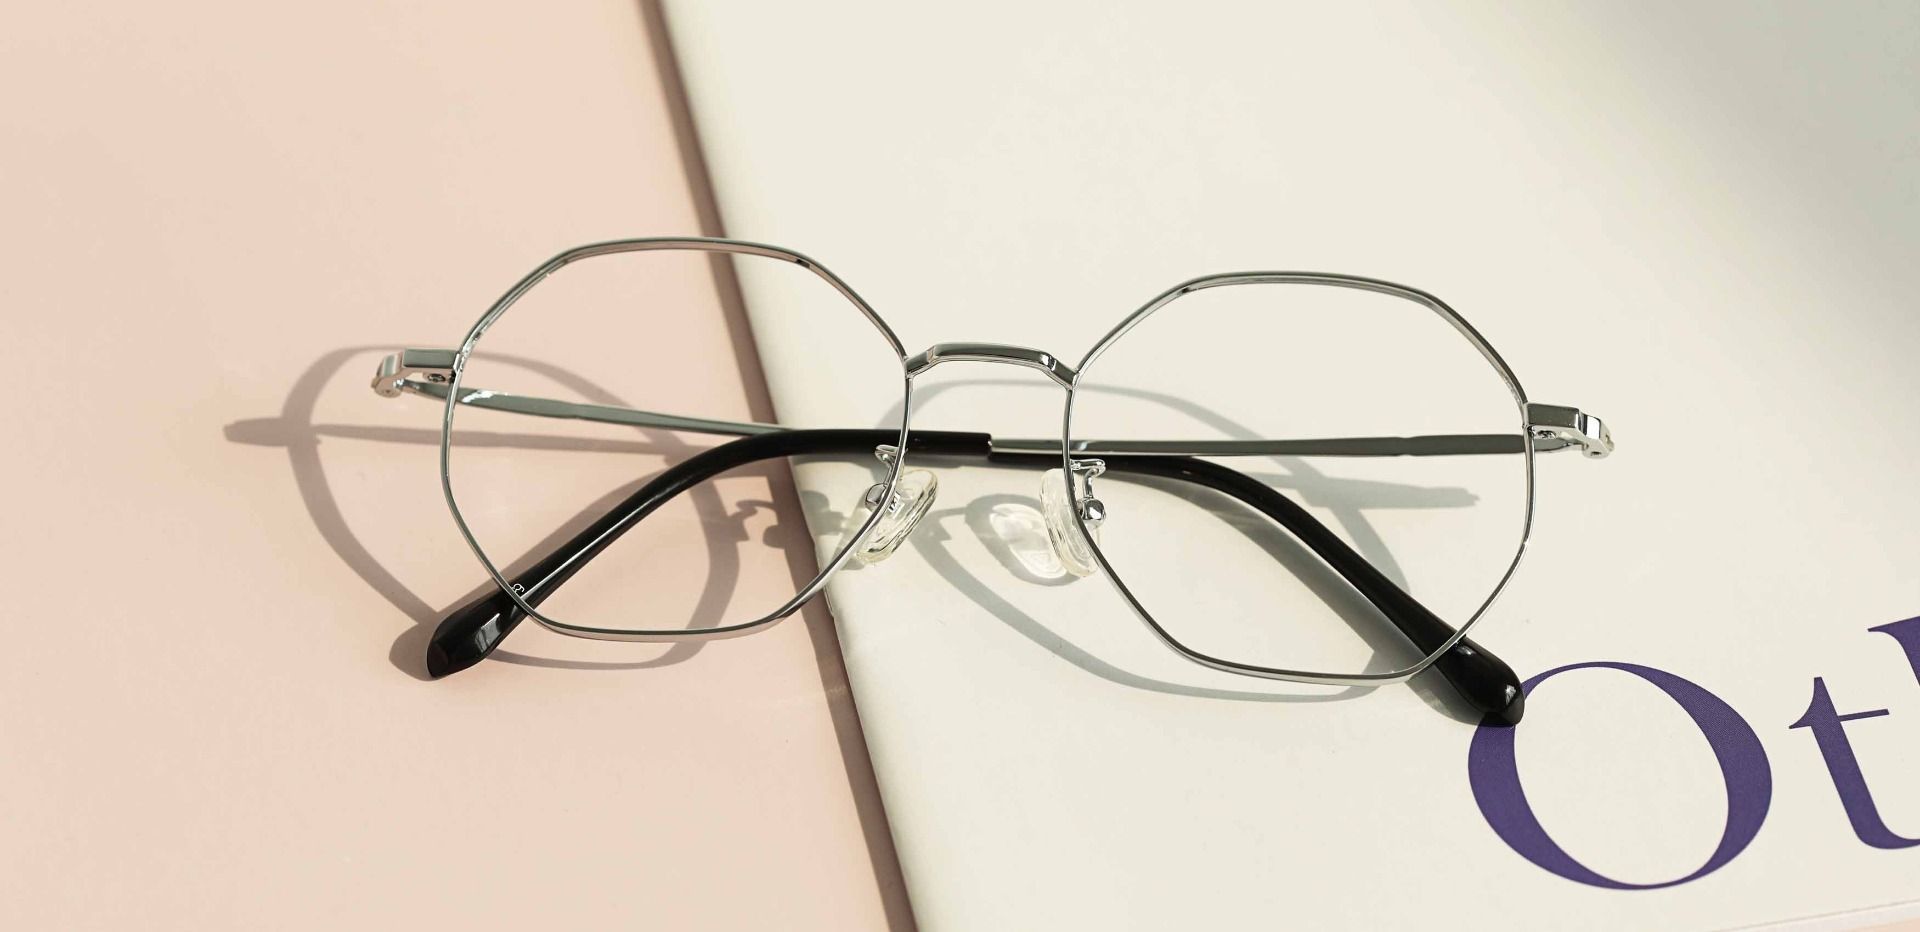 Stephenson Geometric Lined Bifocal Glasses - Silver